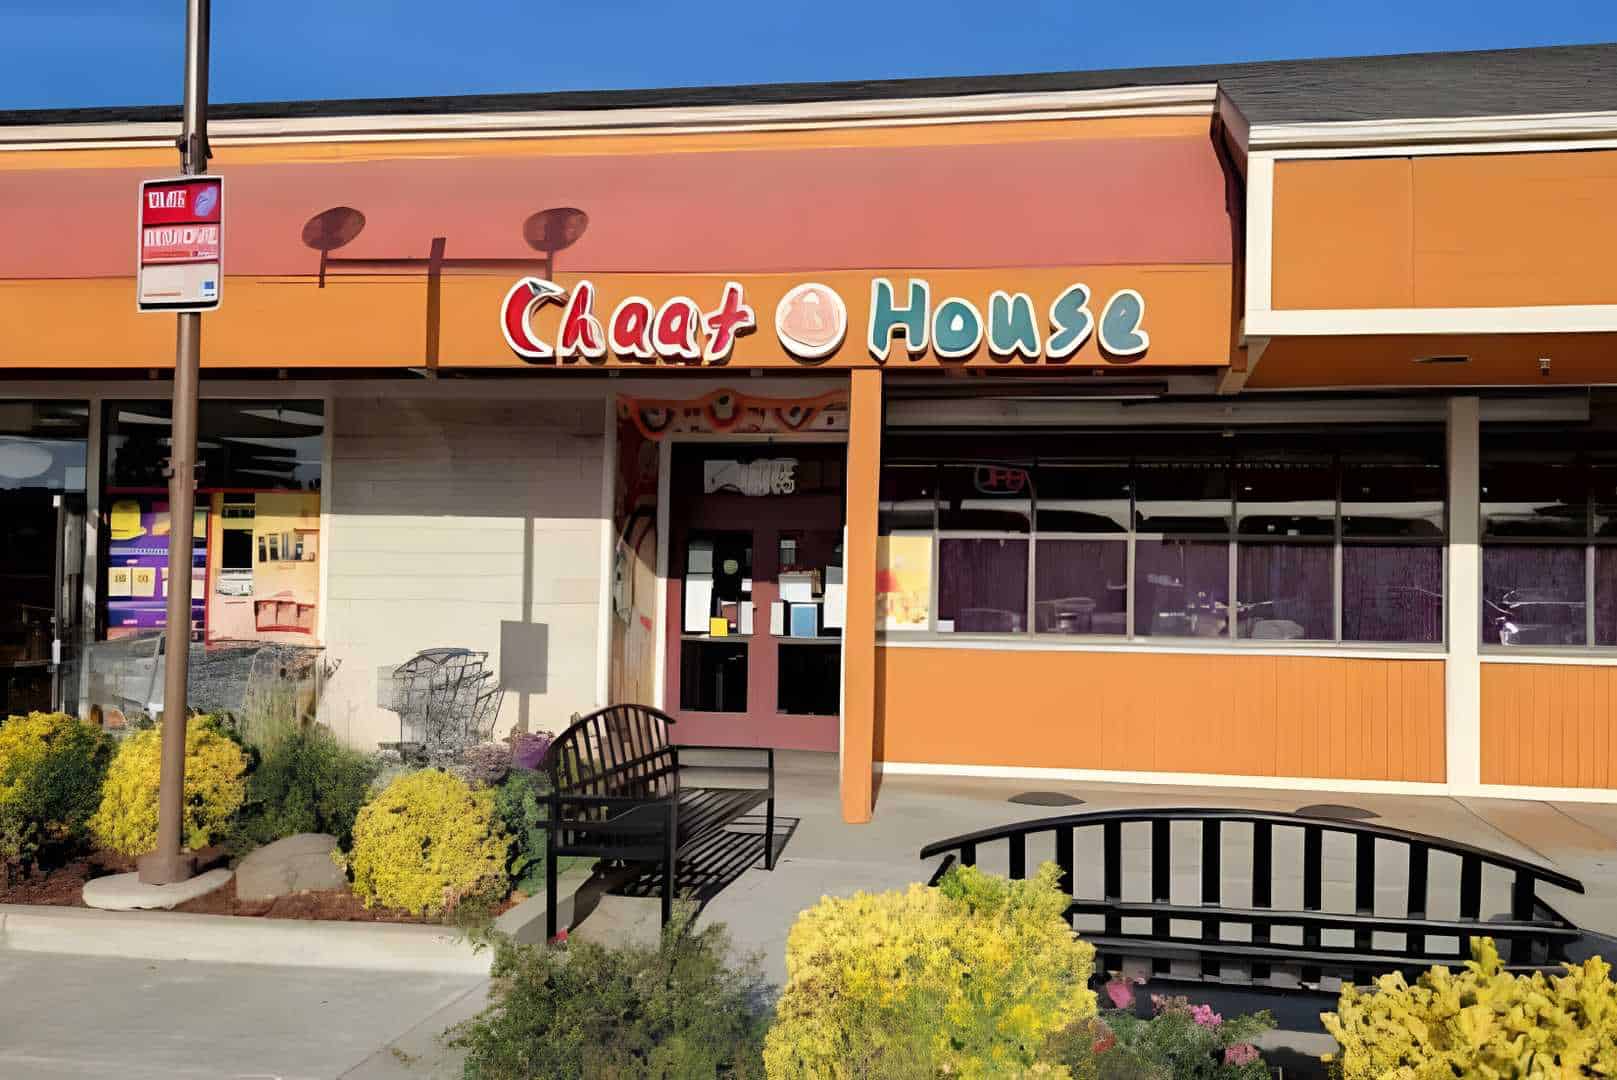 Chaat House Best Indian Restaurants in Fremont, CA